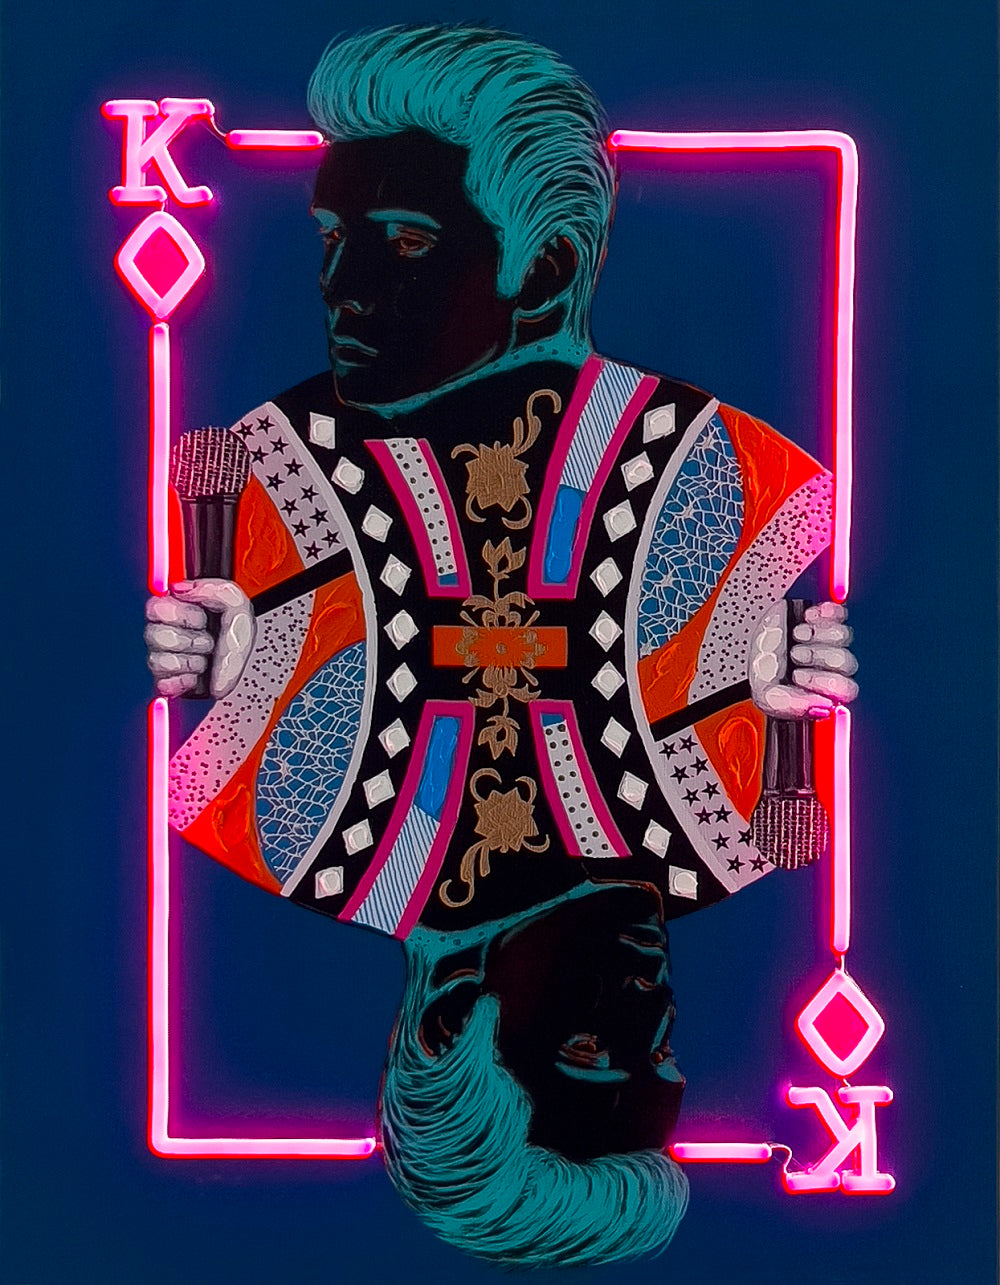 Elvis' Wall Artwork - LED Neon